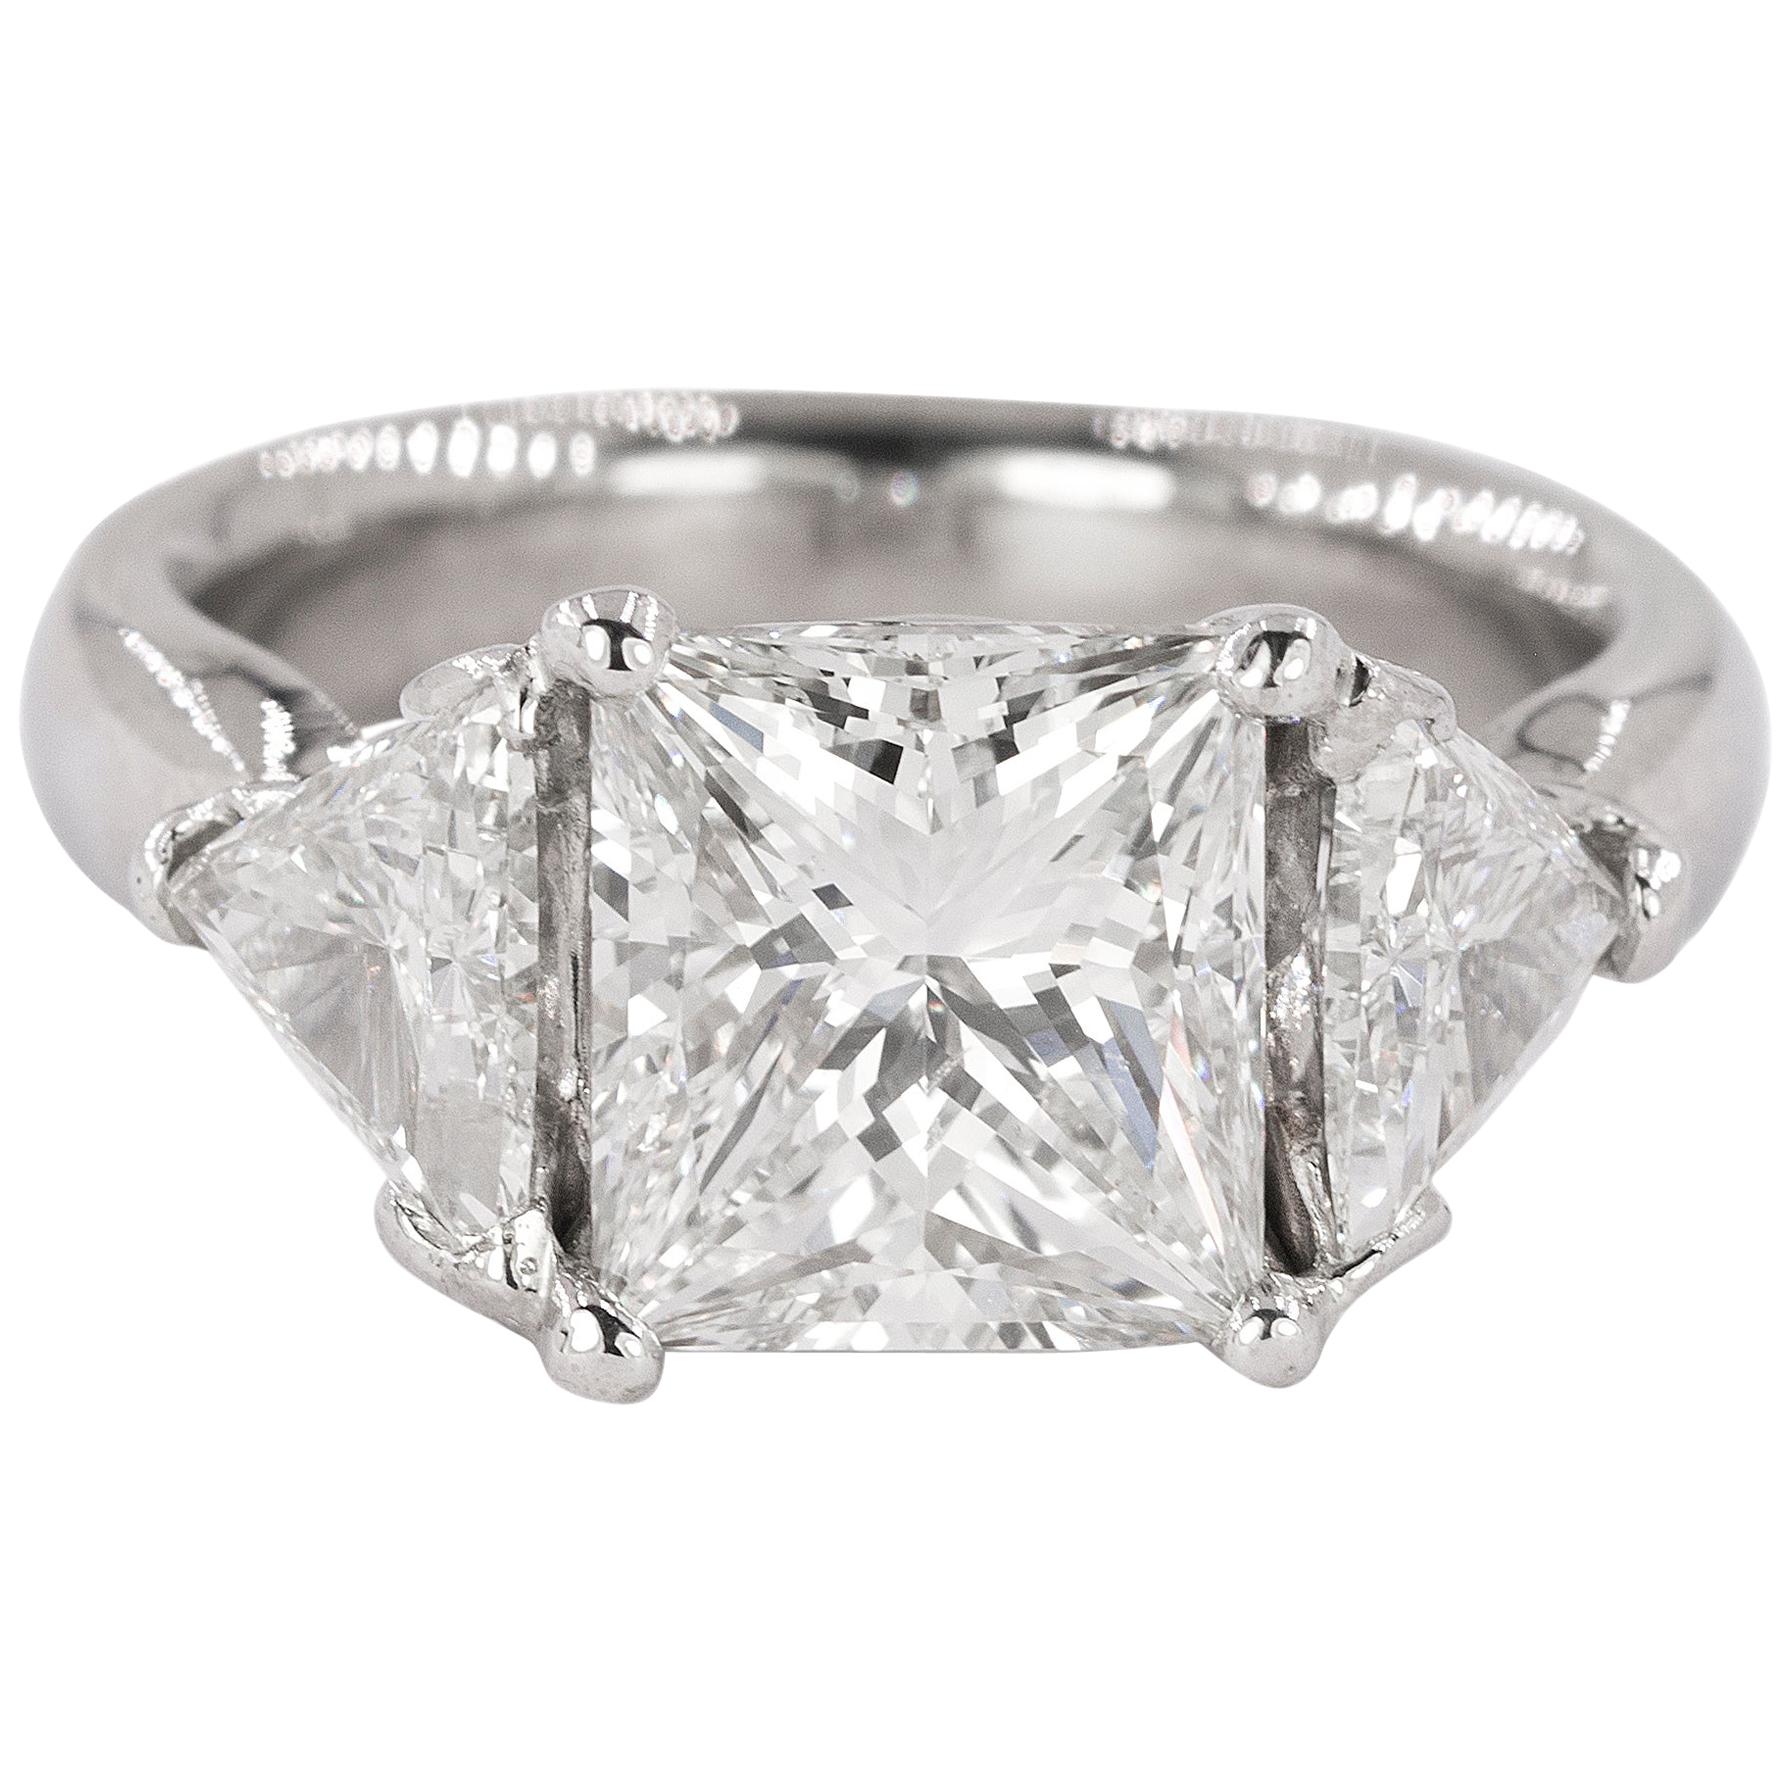 Stunning 3.03 Carat Diamond Ring